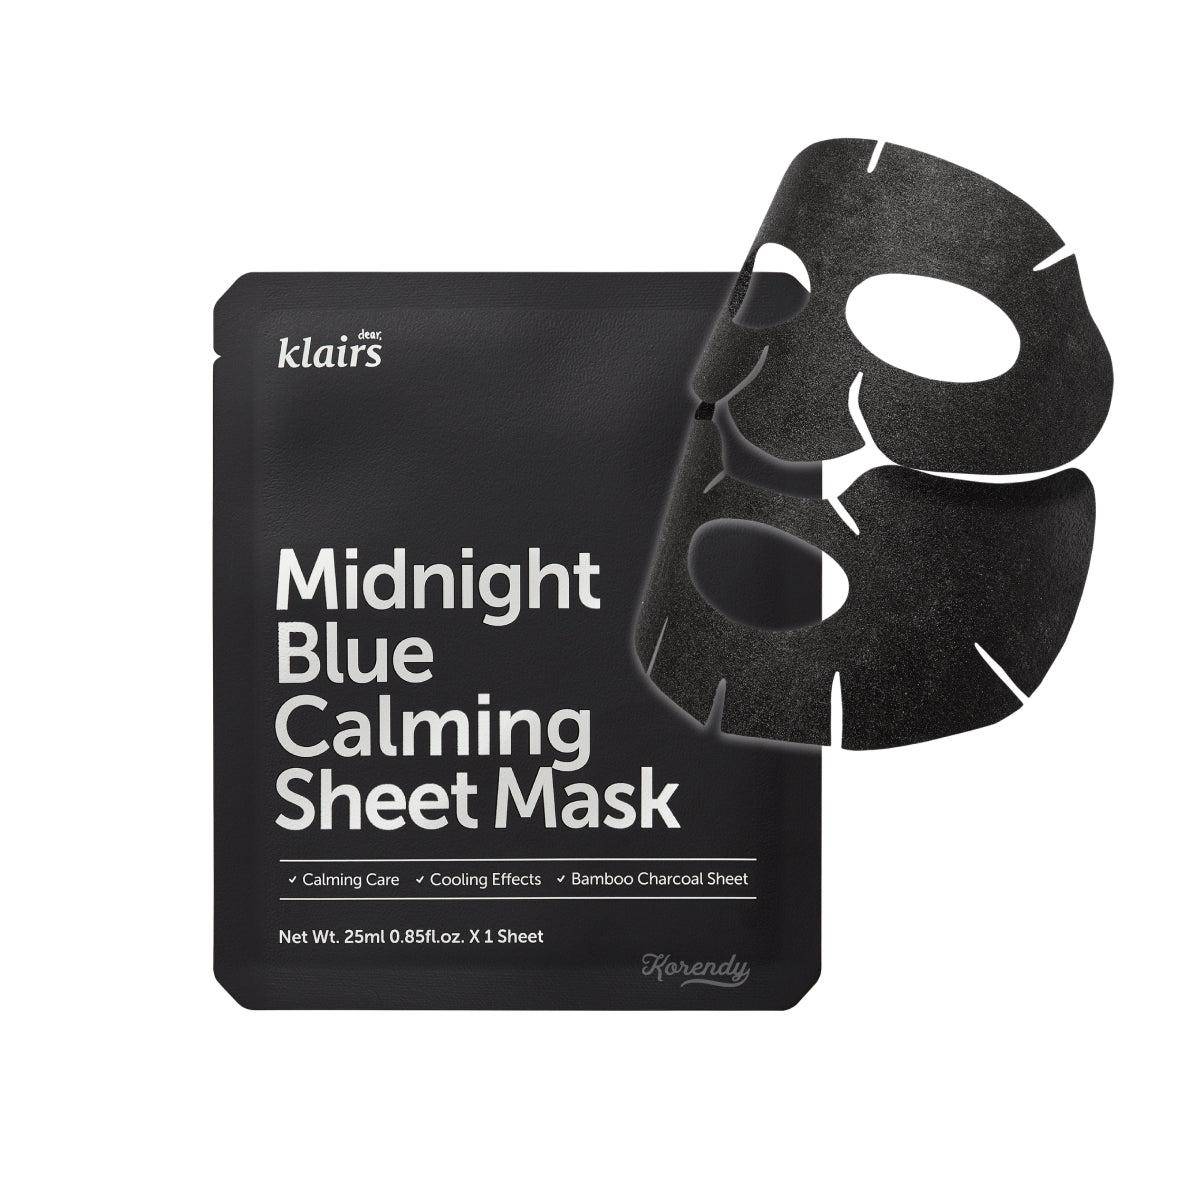 Klairs - Midnight Blue Calming Sheet Mask 25ml Maske (Yaprak) Korendy Türkiye Turkey Kore Kozmetik Kbeauty Cilt Bakım 